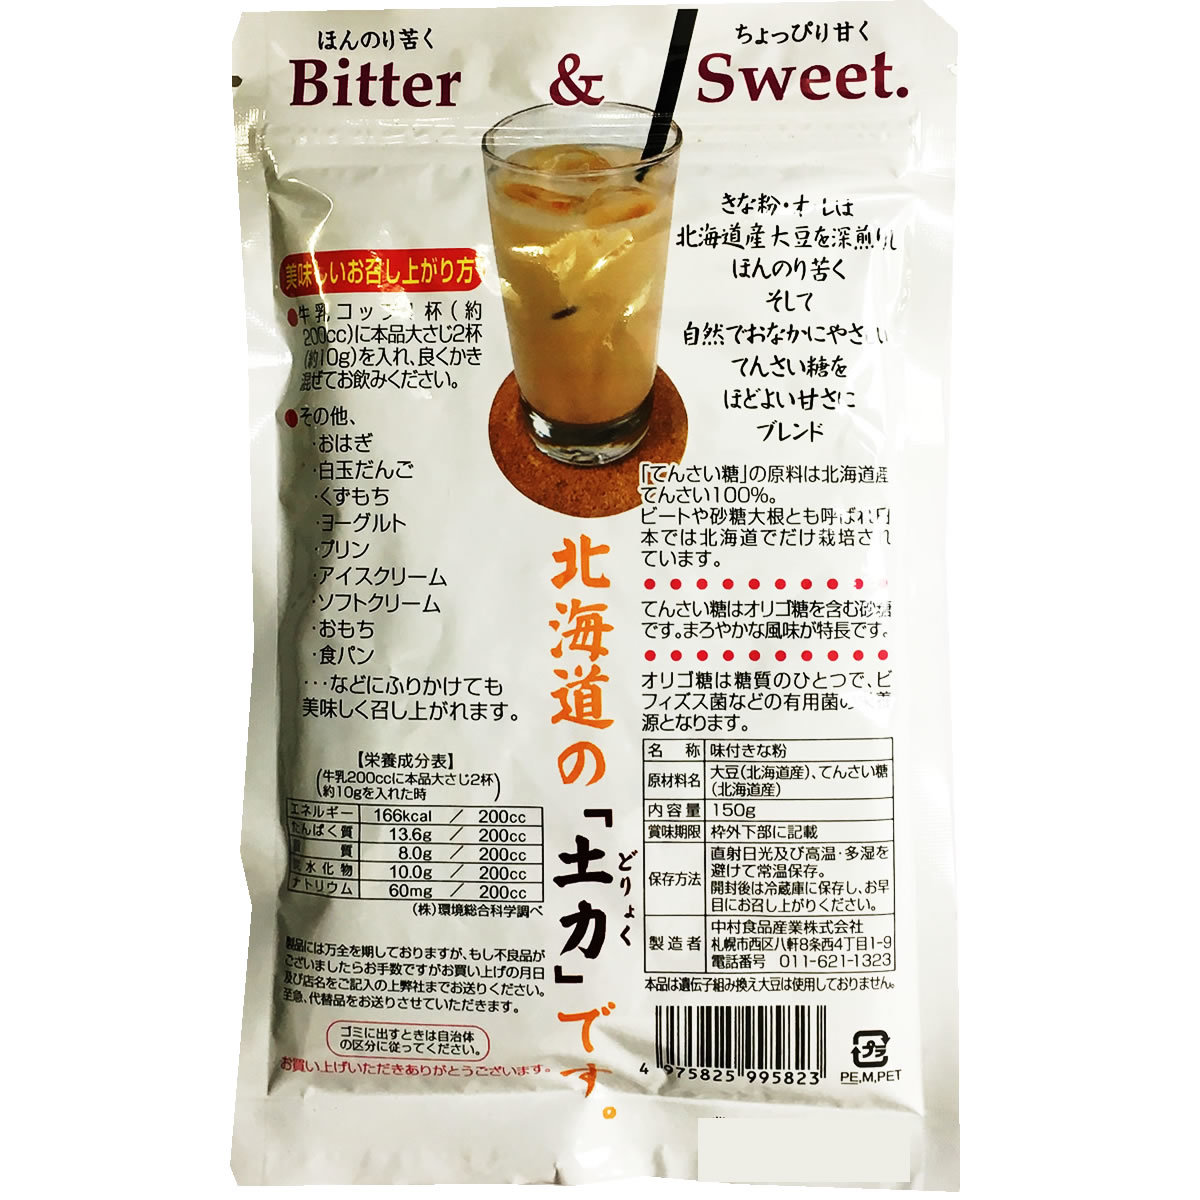  Nakamura food impression. Hokkaido Kinako ore150g×2 sack trial set 